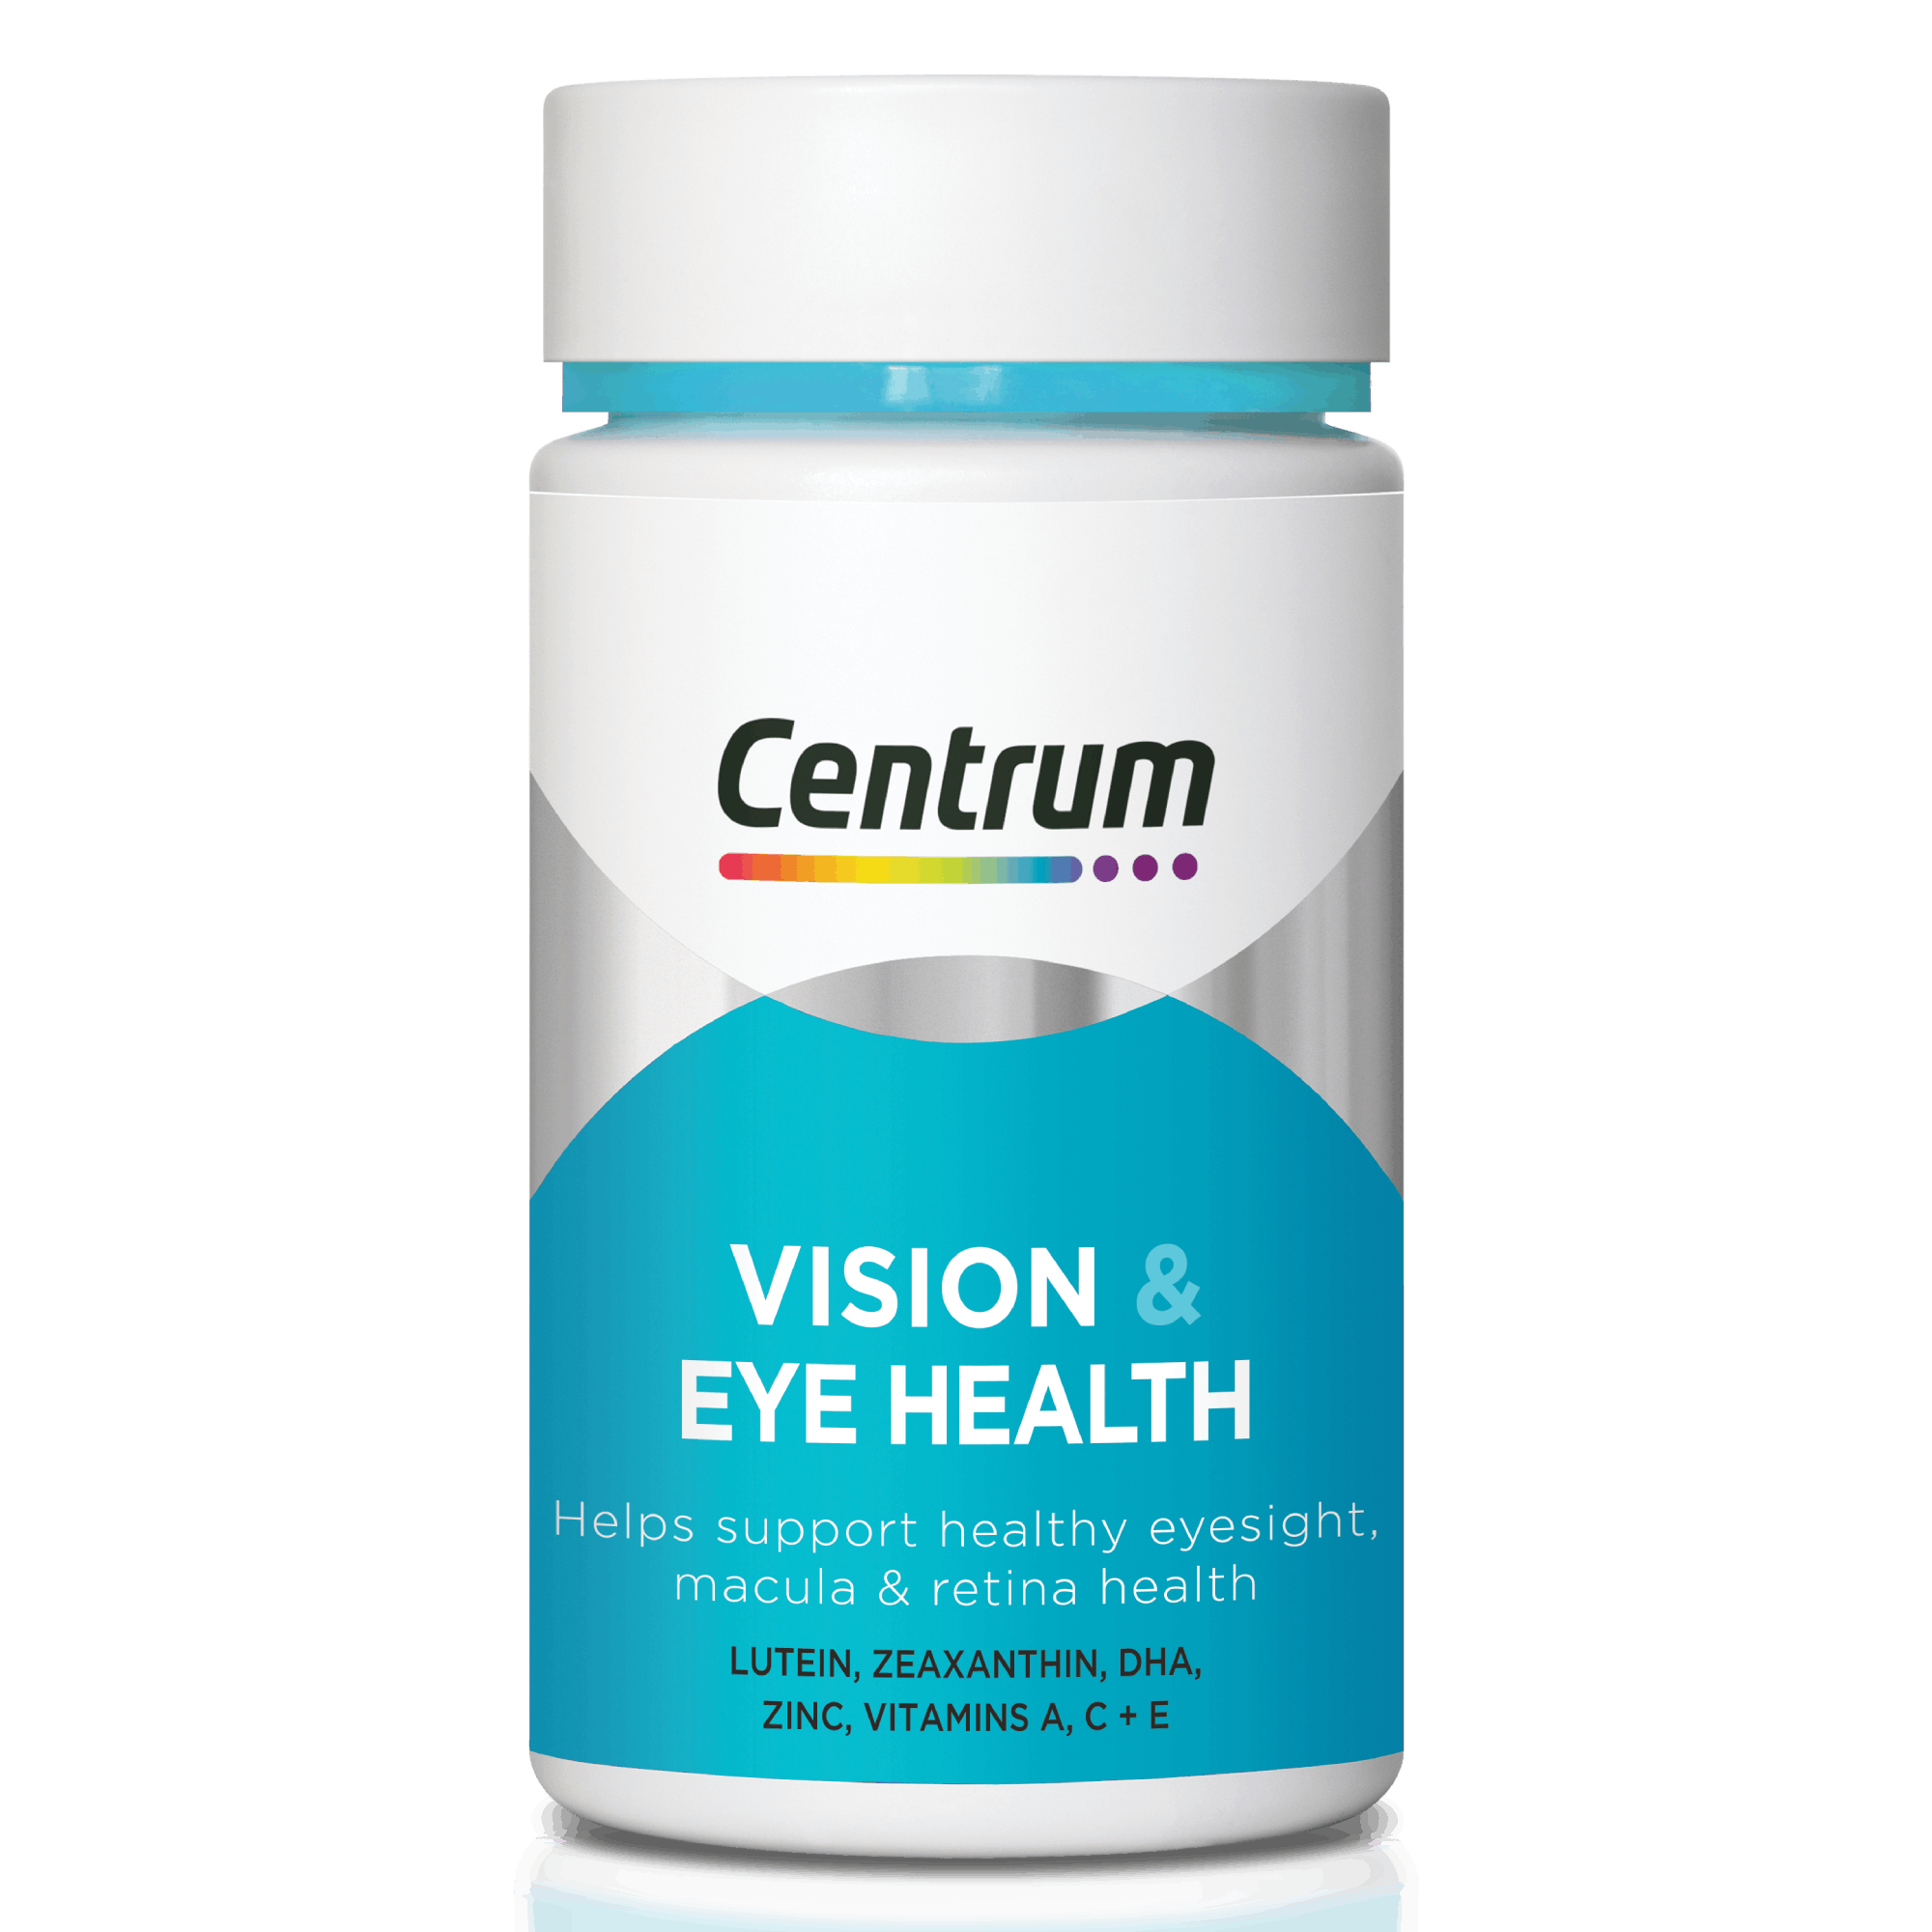 Multivitamin for eye health